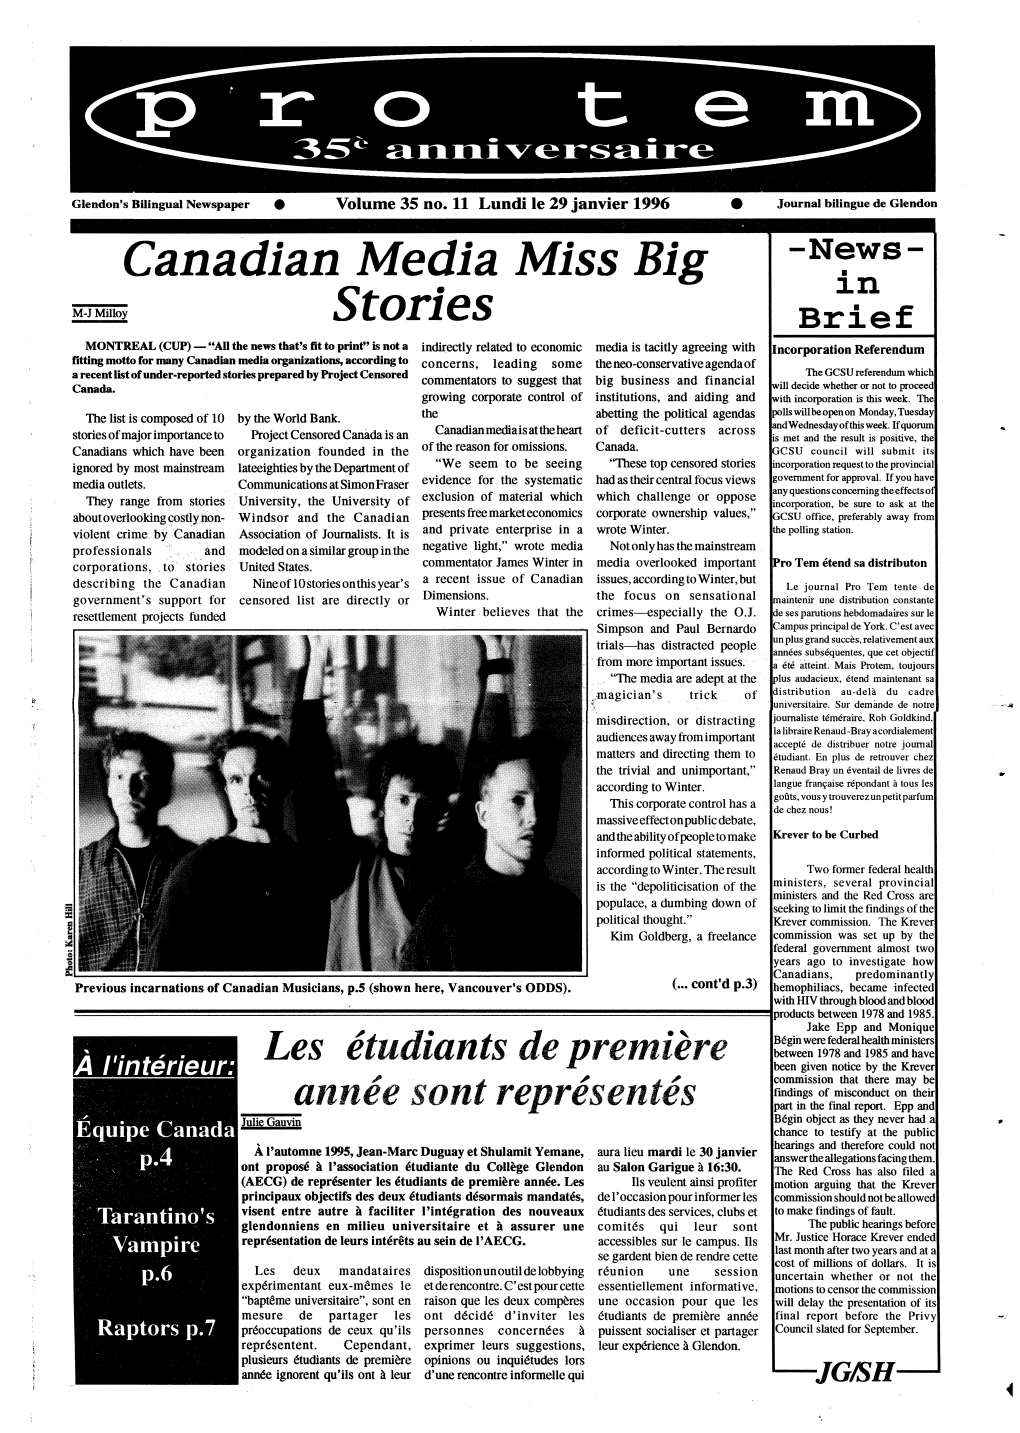 Canadian Media Miss Big Stories